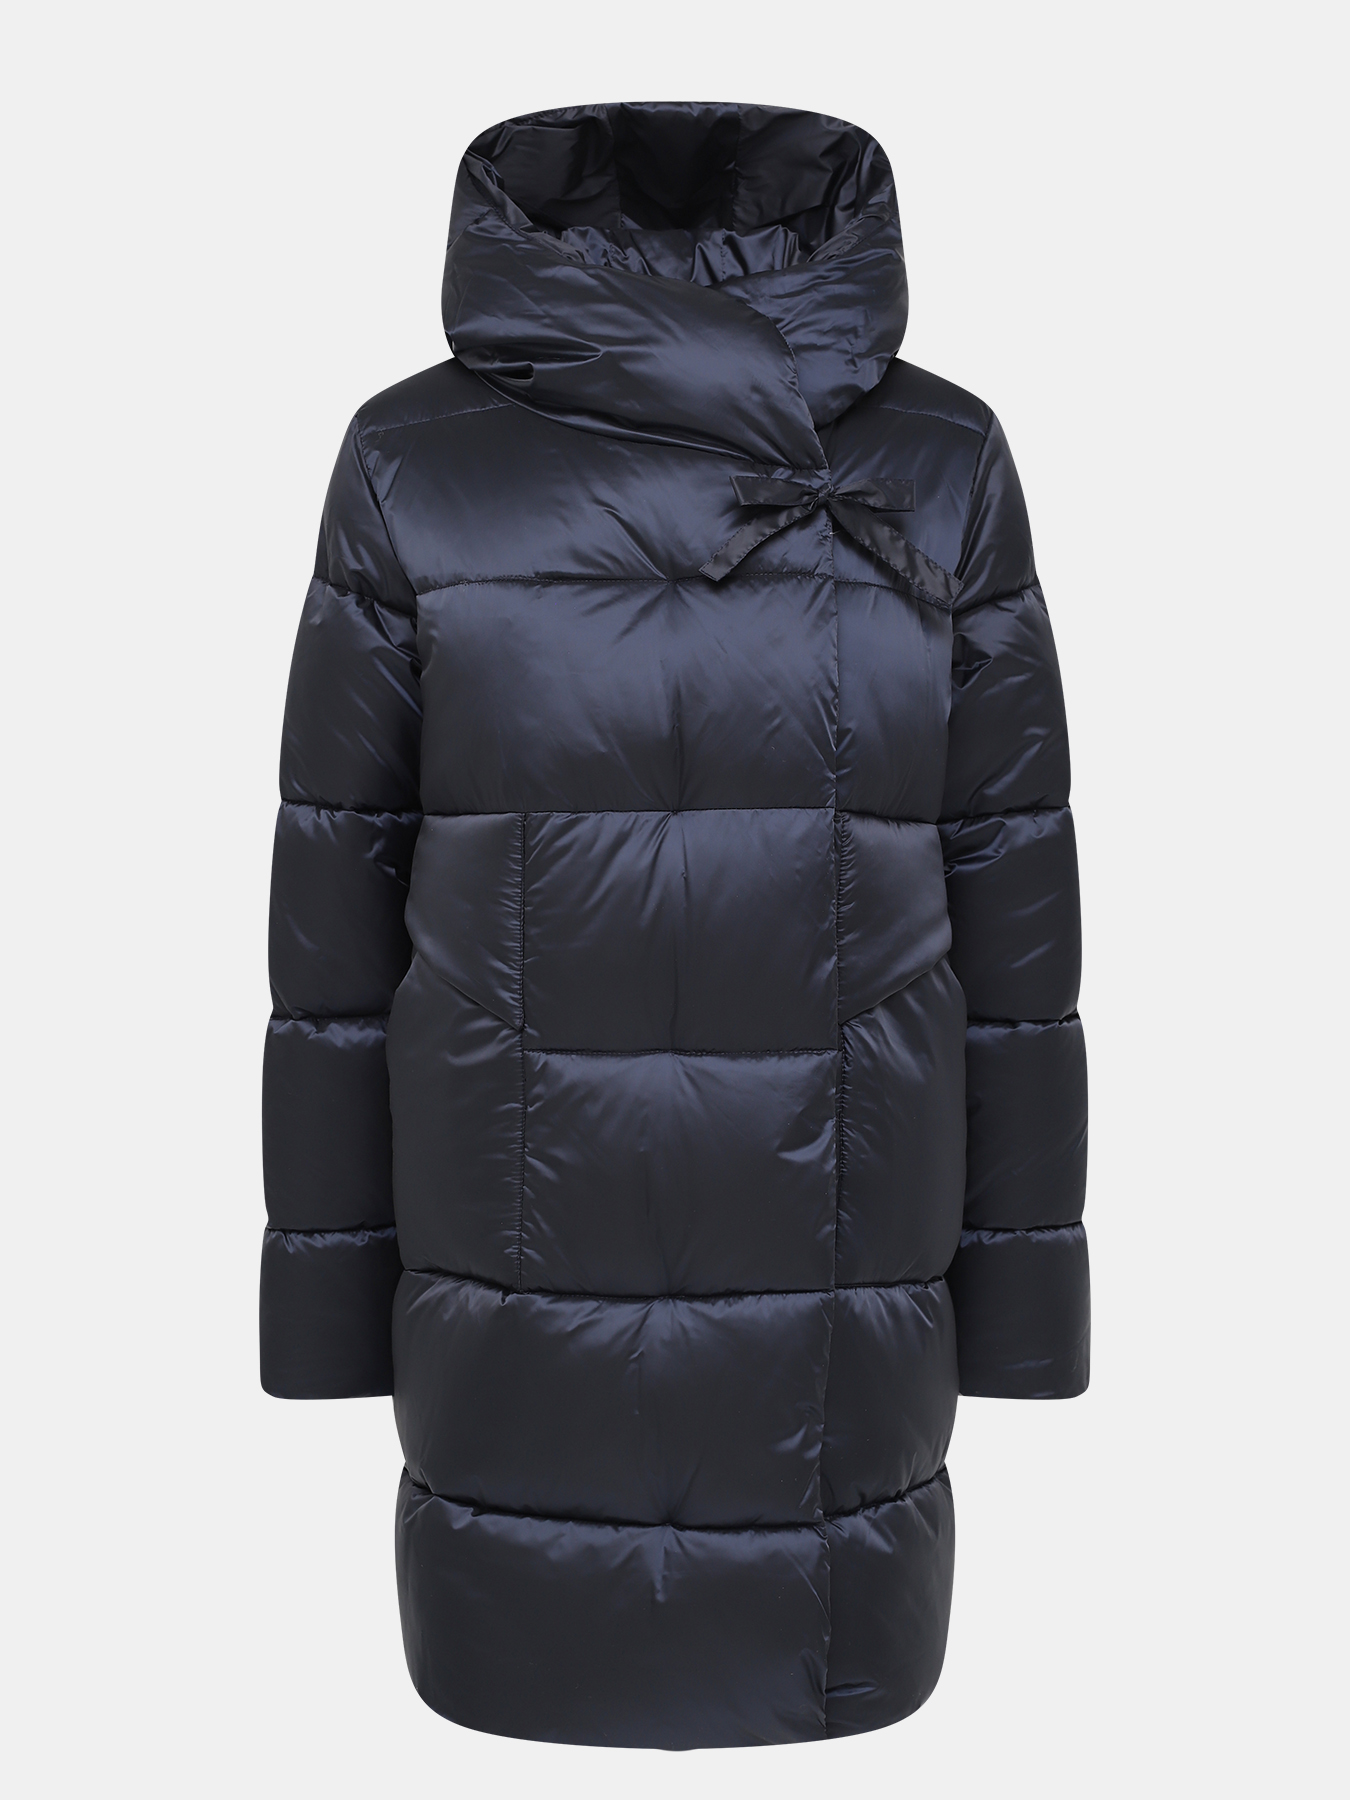 Пальто зимнее Maritta 433530-025, цвет темно-синий, размер 48 - фото 1